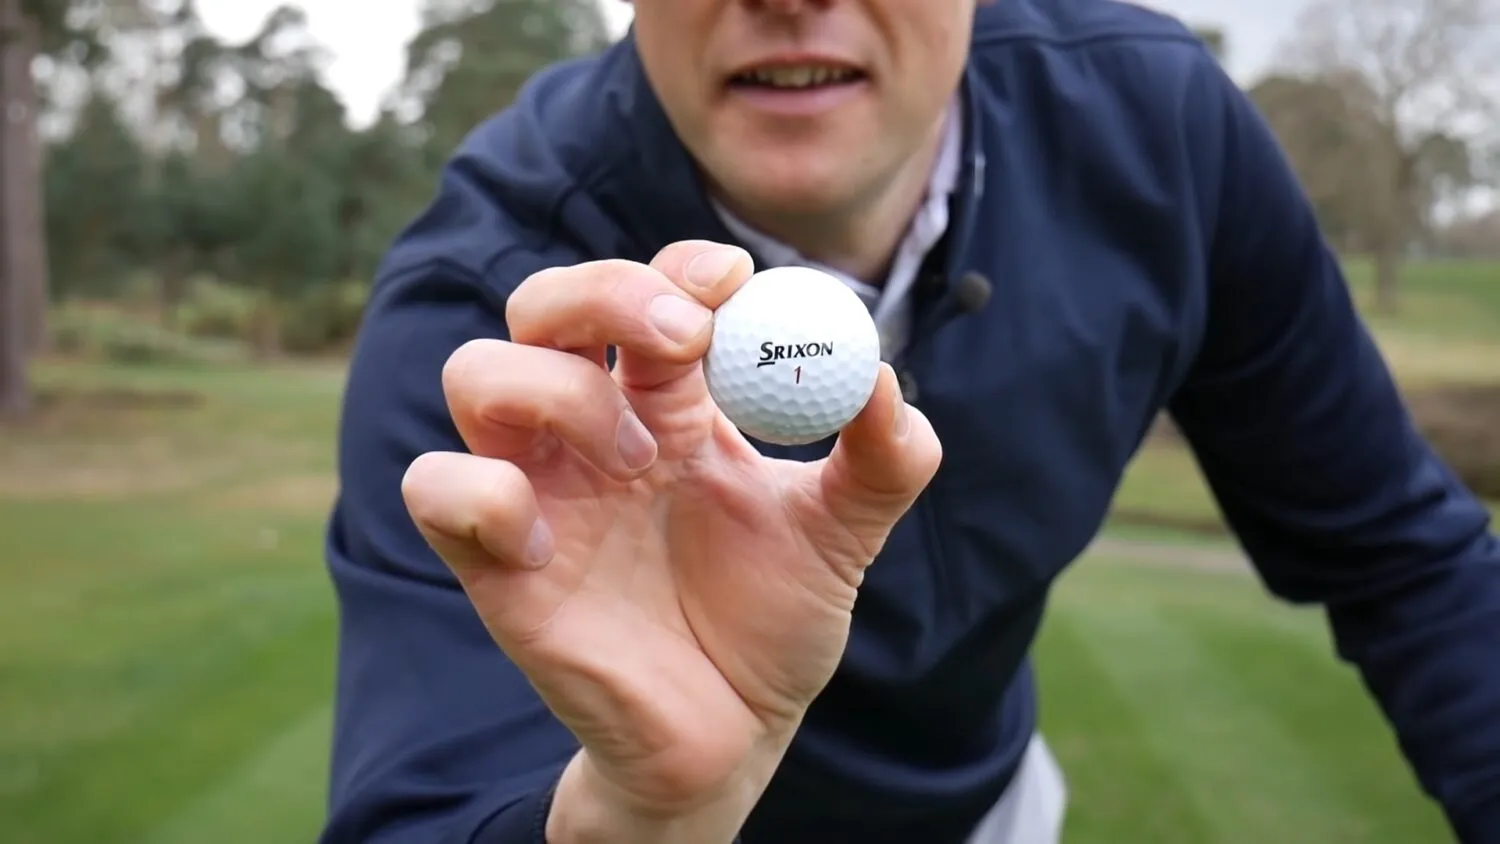 srixon golf ball